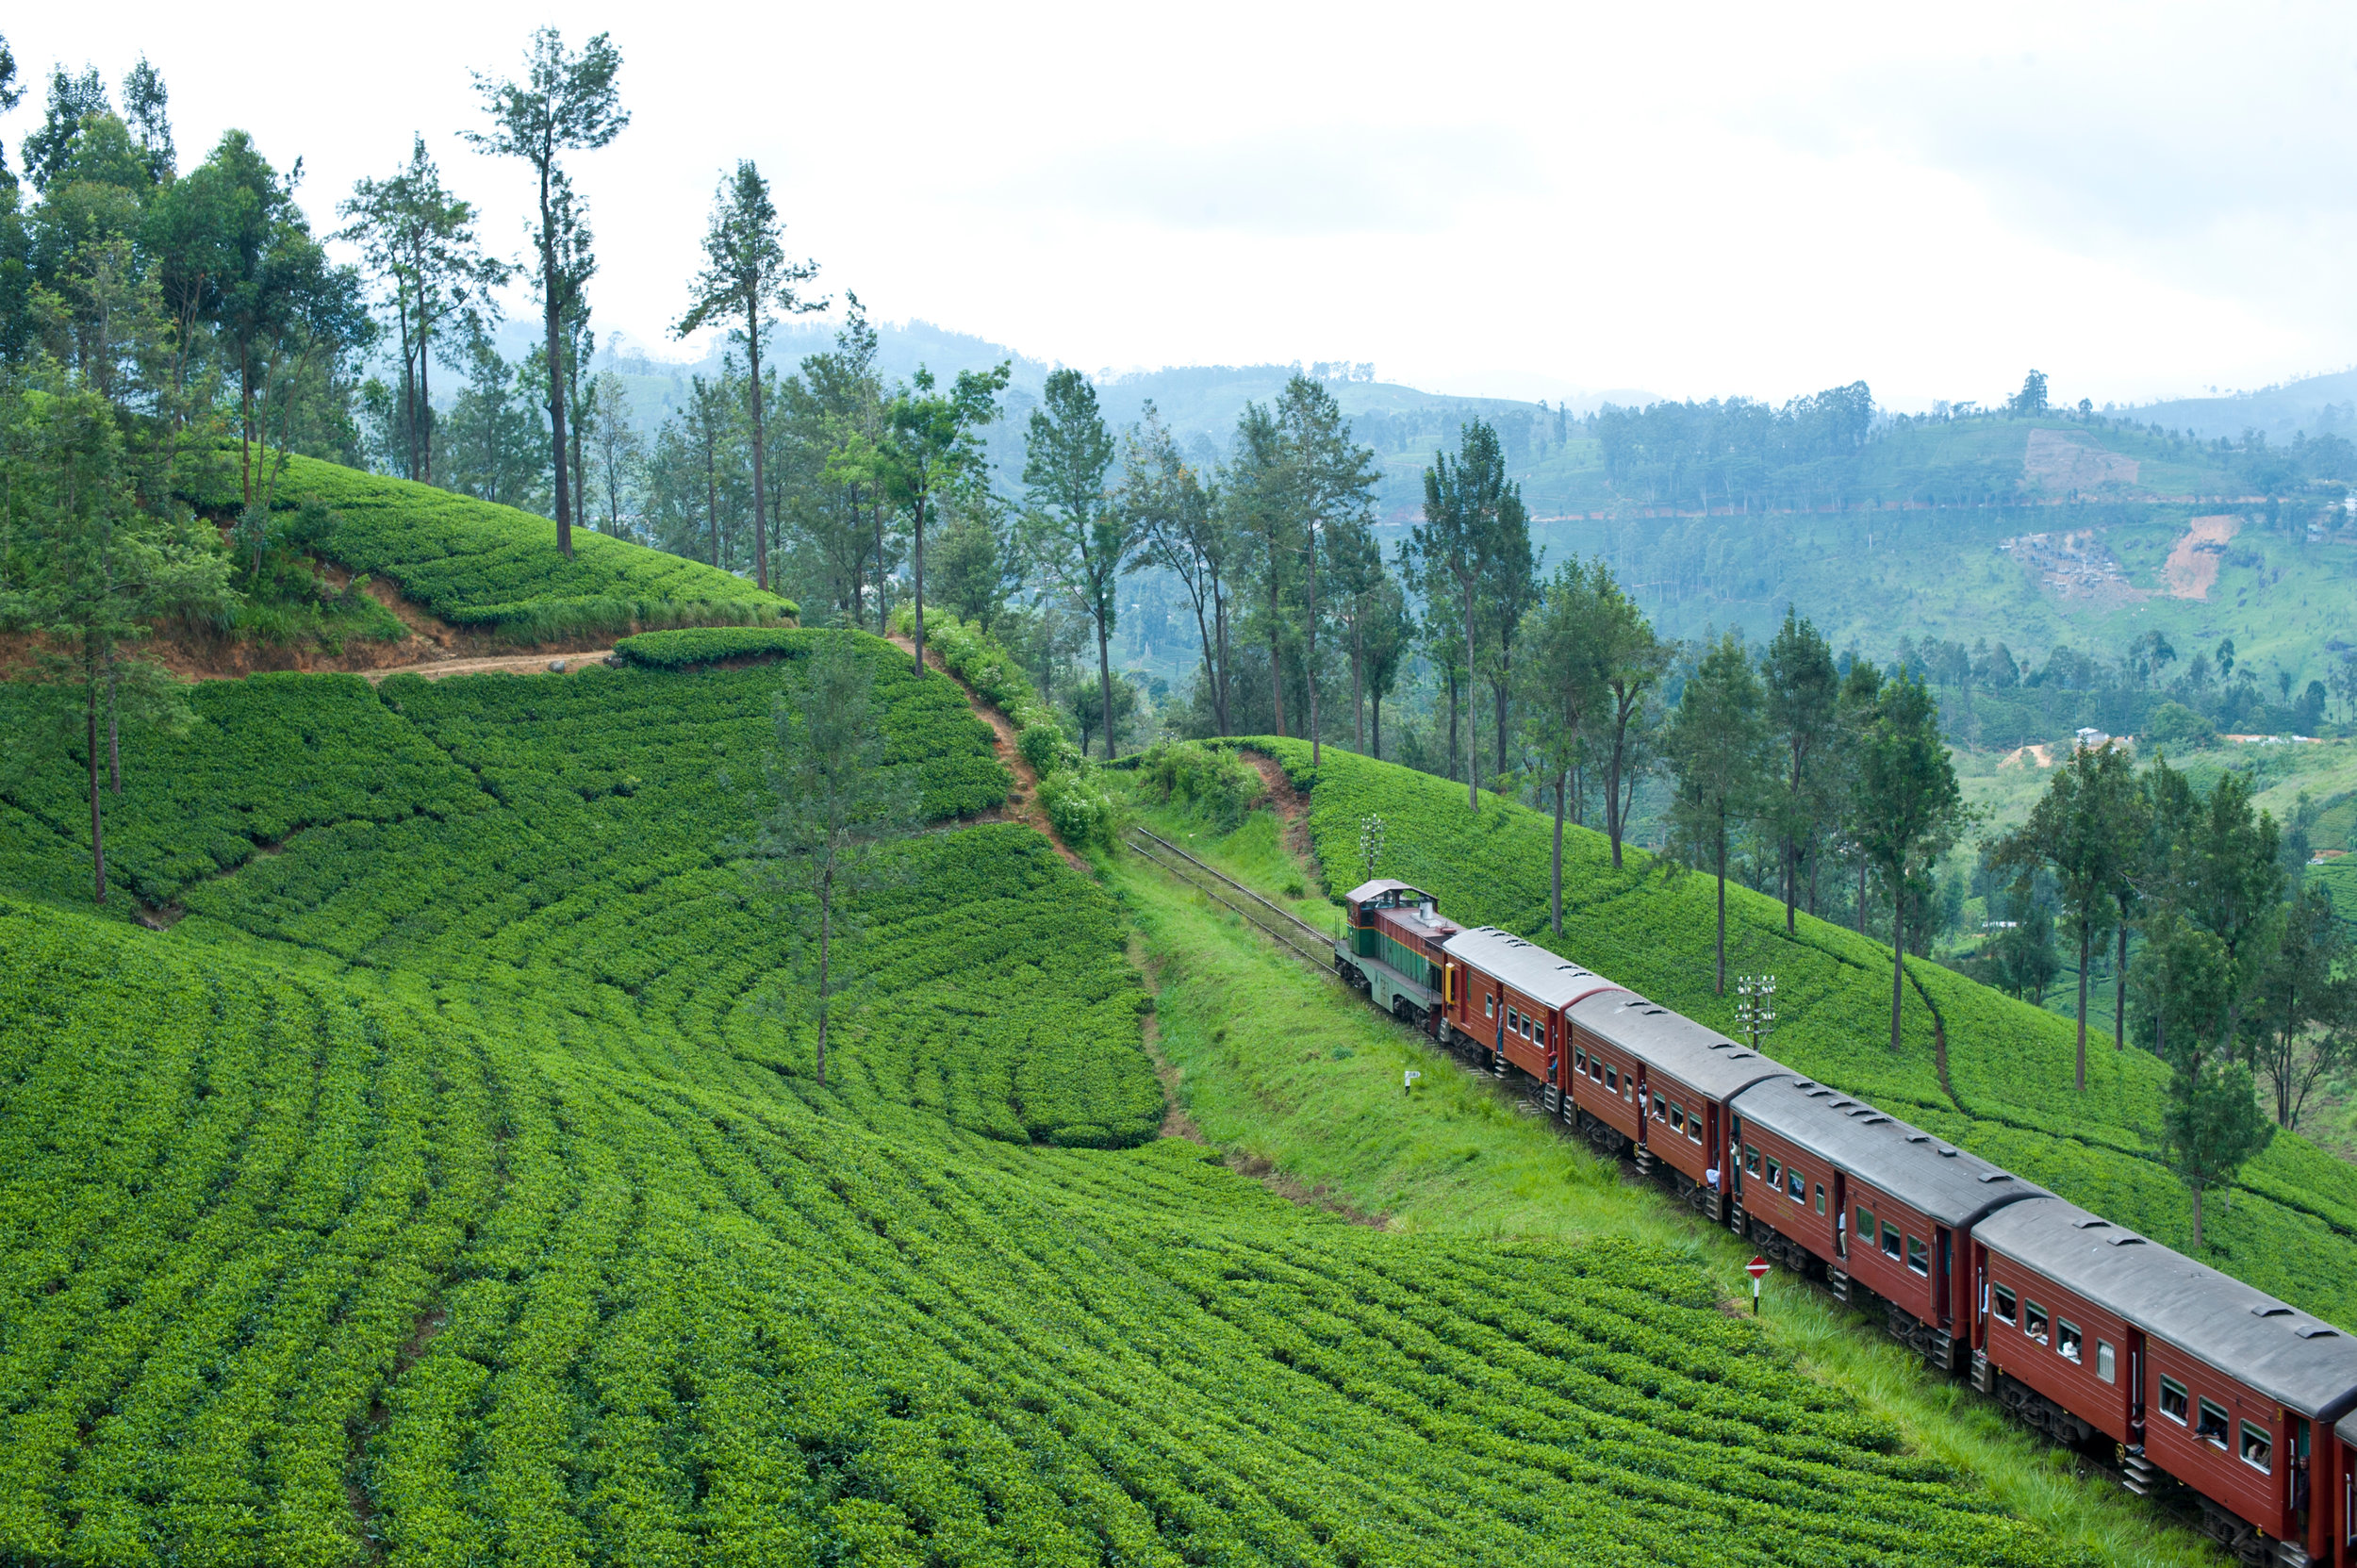 Train journey through tea plantations in Sri Lanka